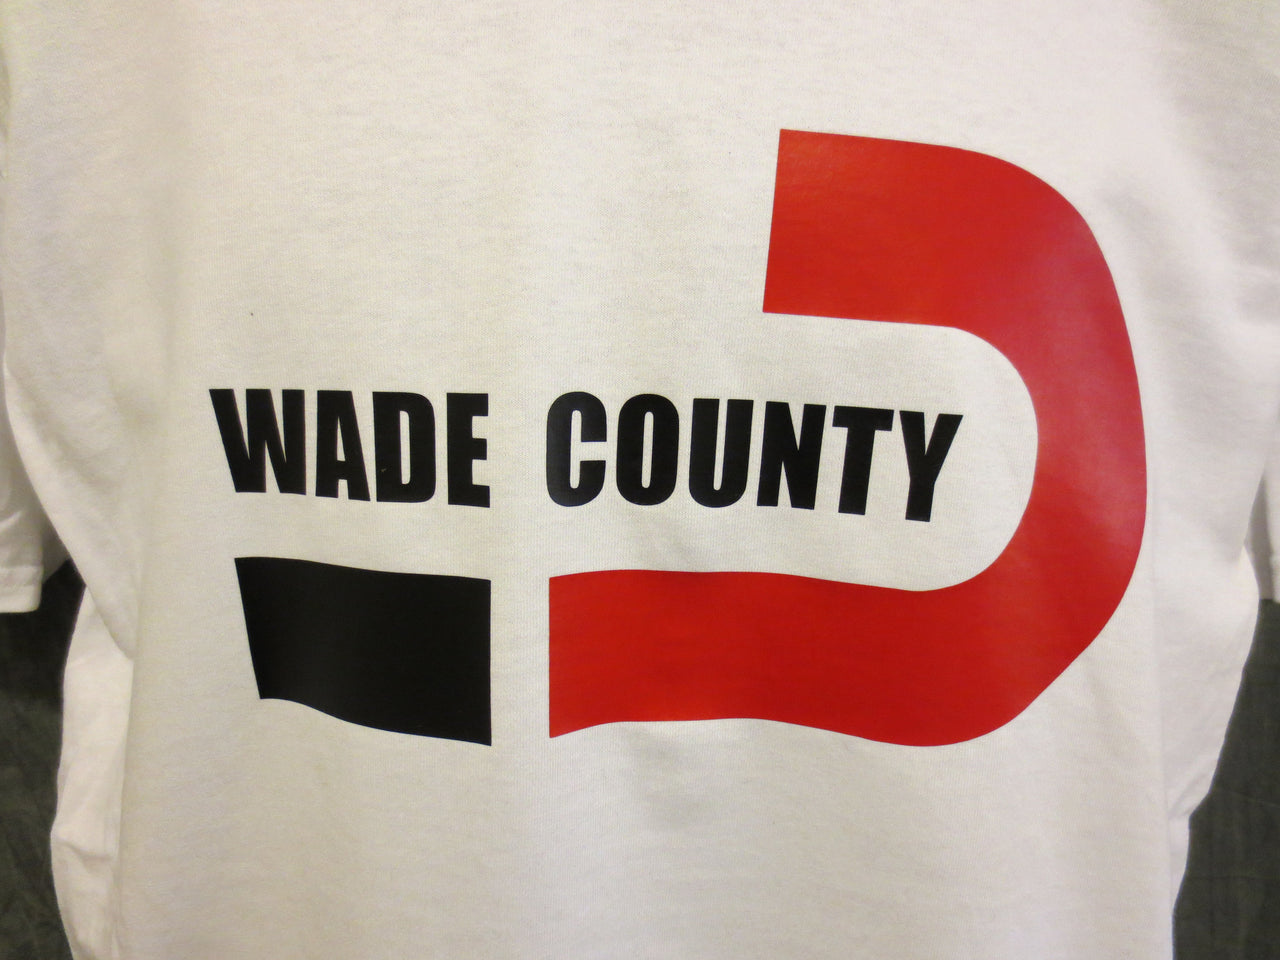 Miami Heat "Wade County" Dwyane Wade White Tshirt - TshirtNow.net - 3